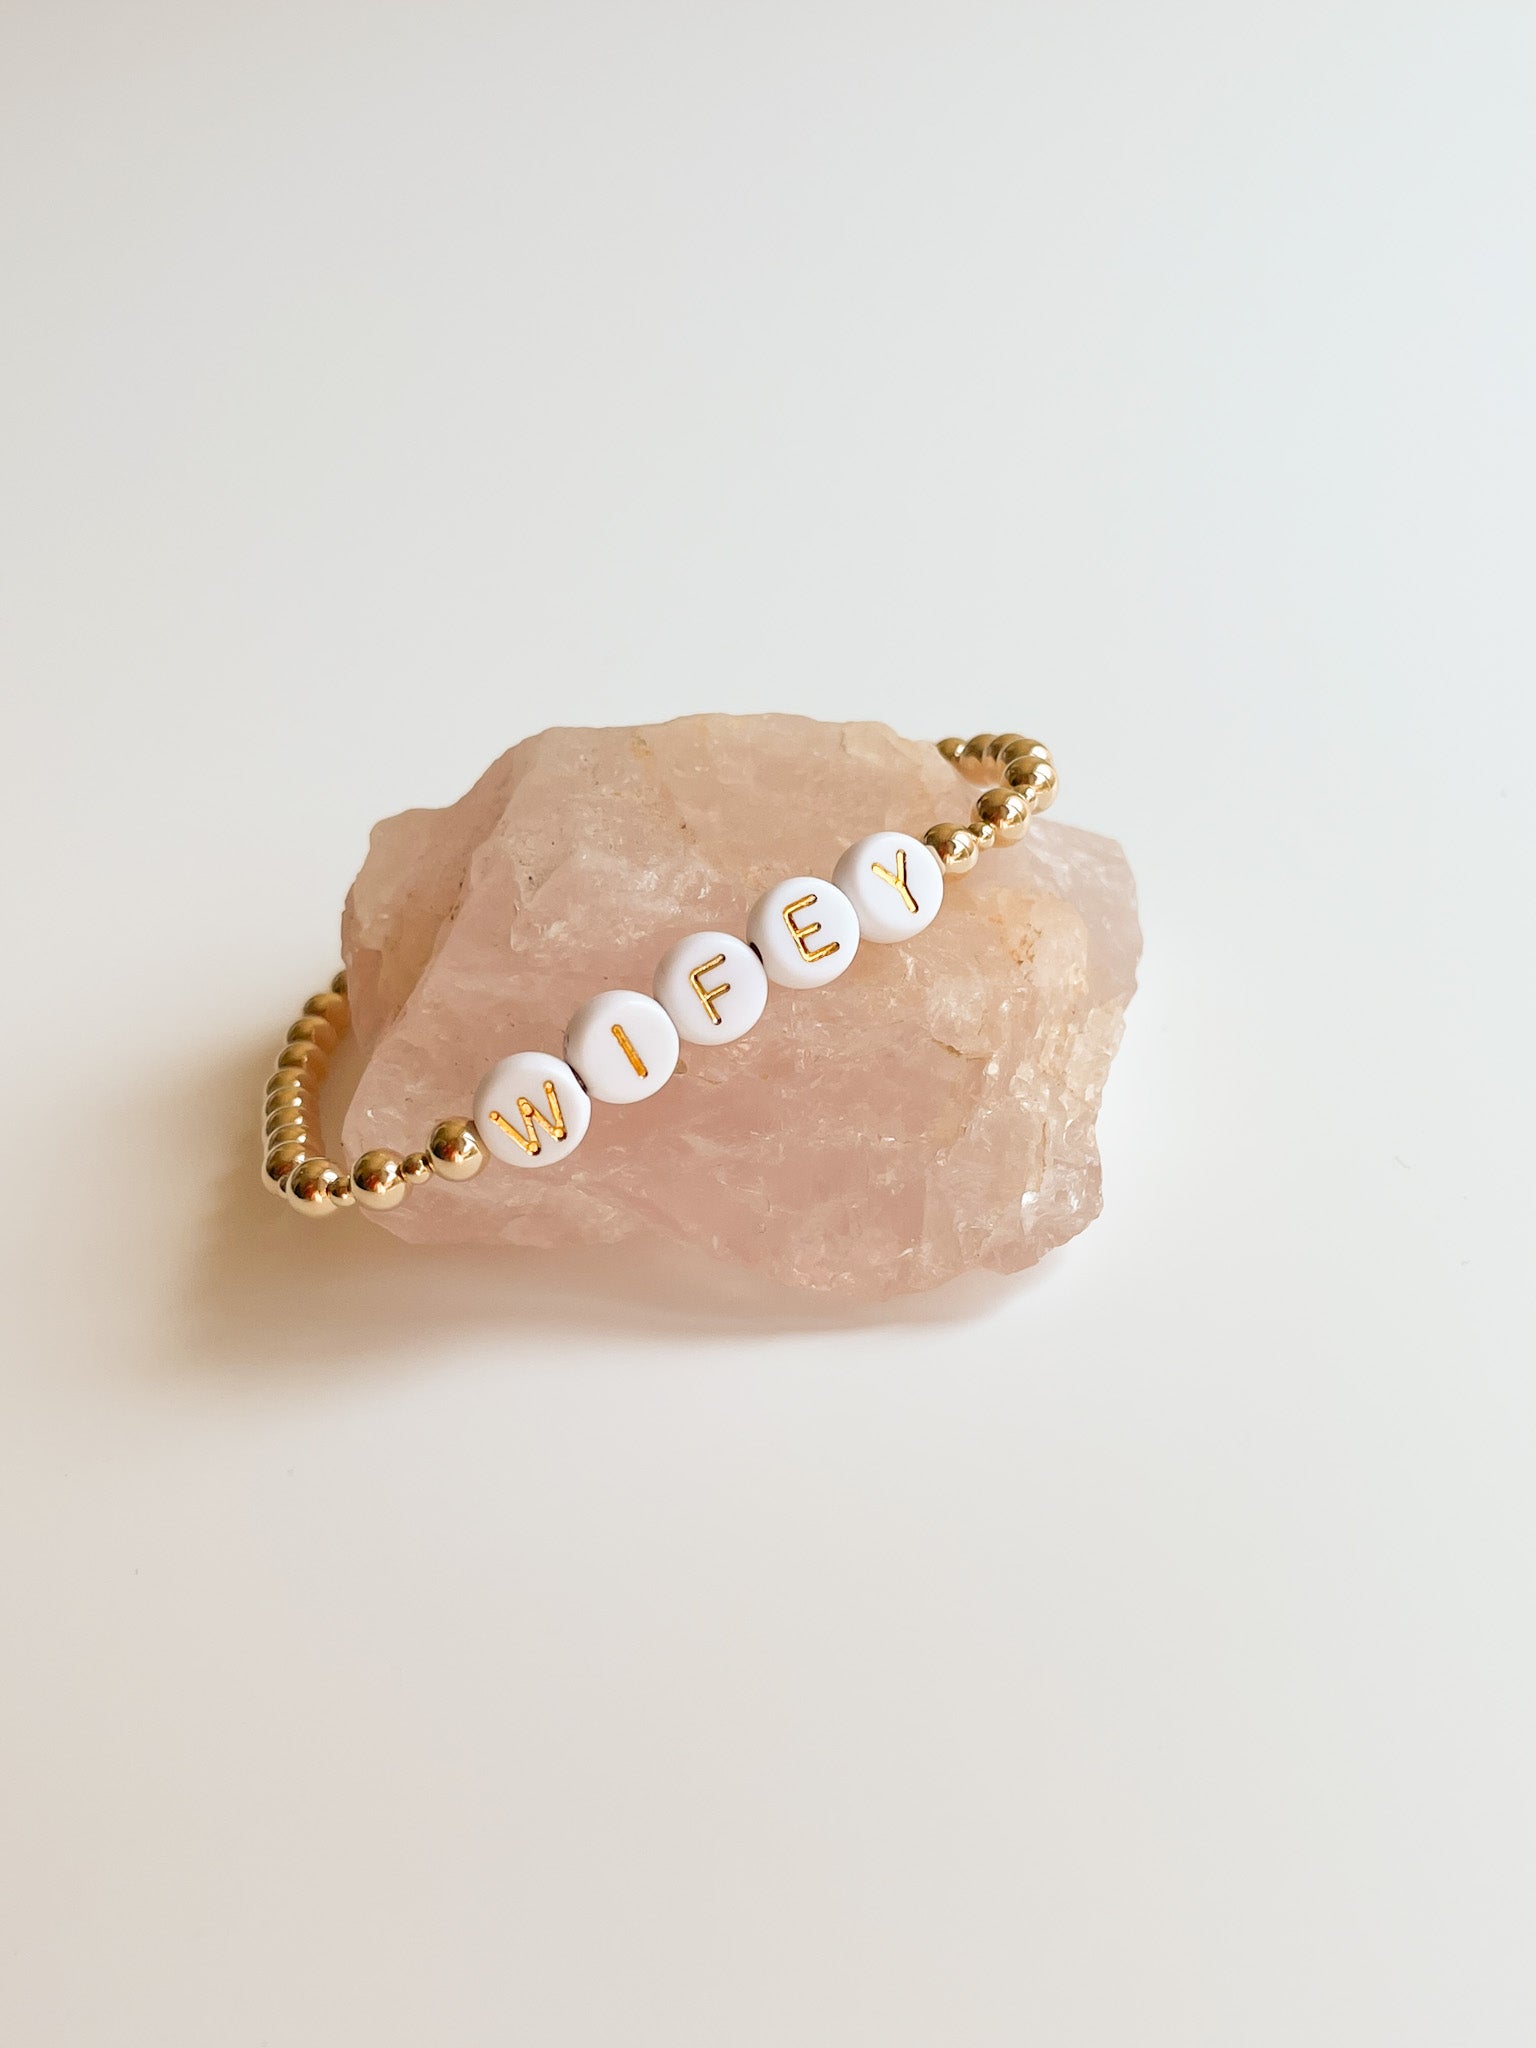 Custom Name Bracelet | Cube/Square Letters | 14K 4mm Gold Filled Beads | Personalized Name Bracelet | Word Bracelet | Gift for Her